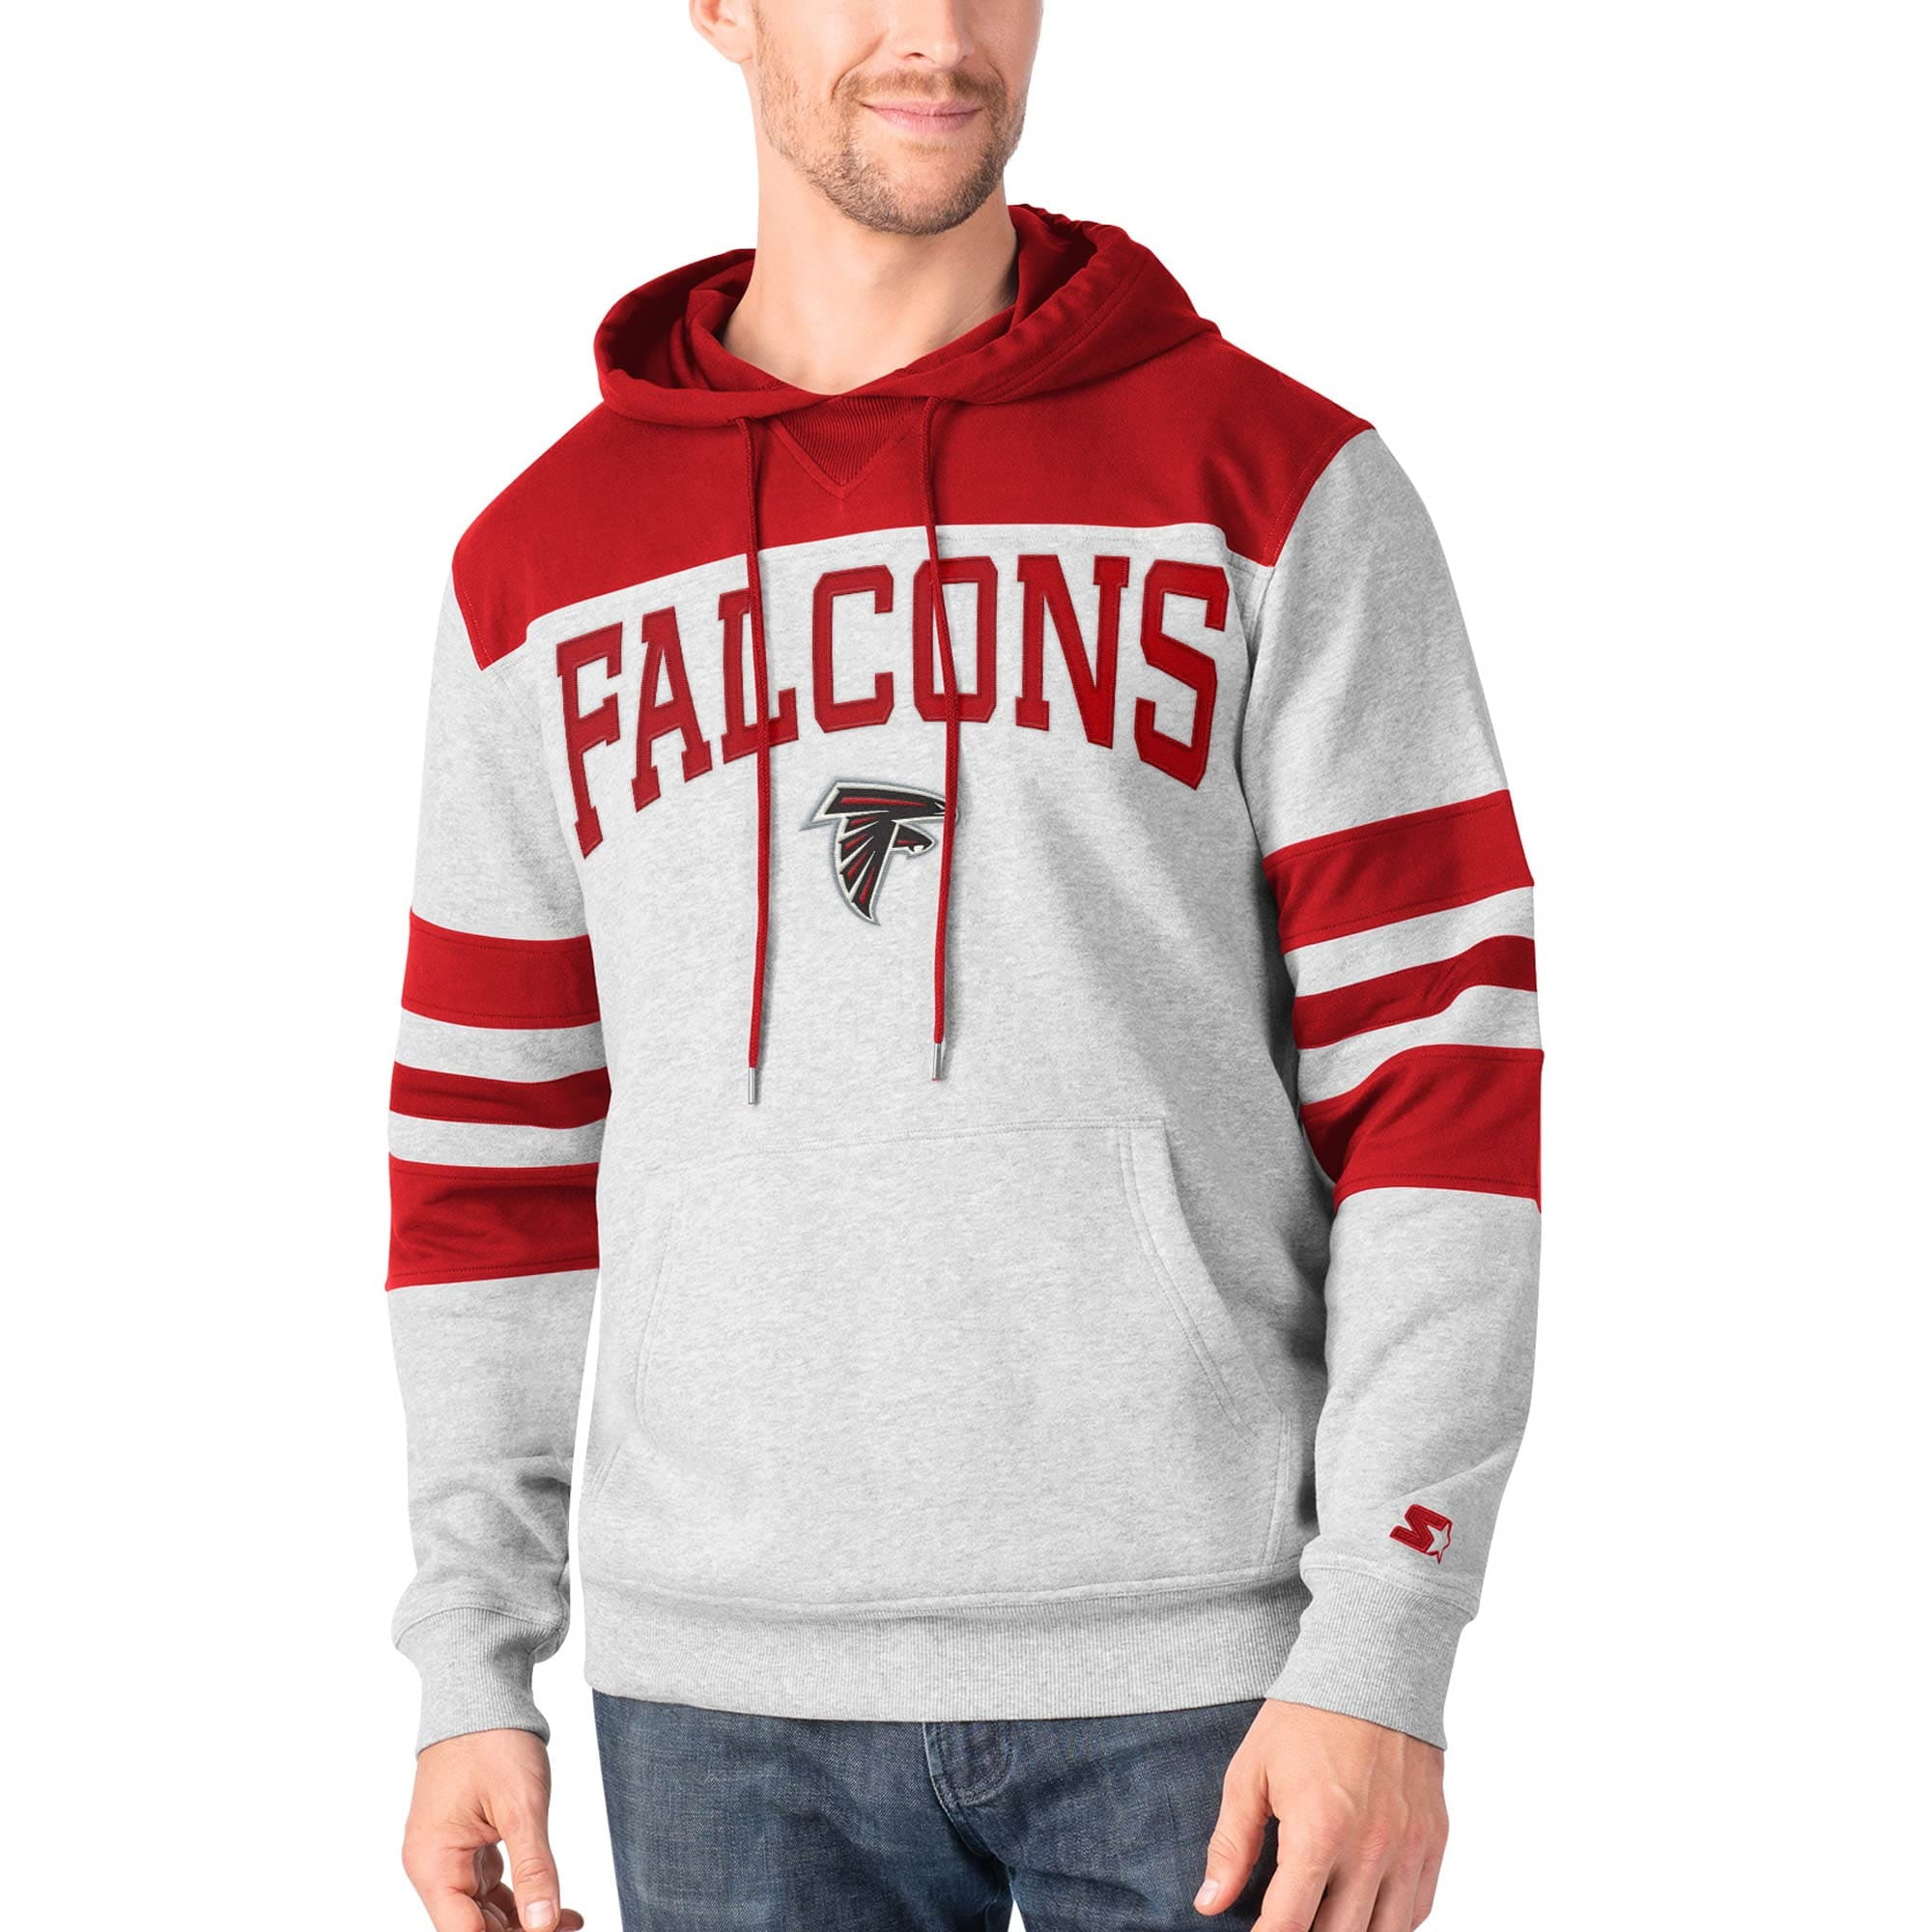 falcons hoodie sweatshirt